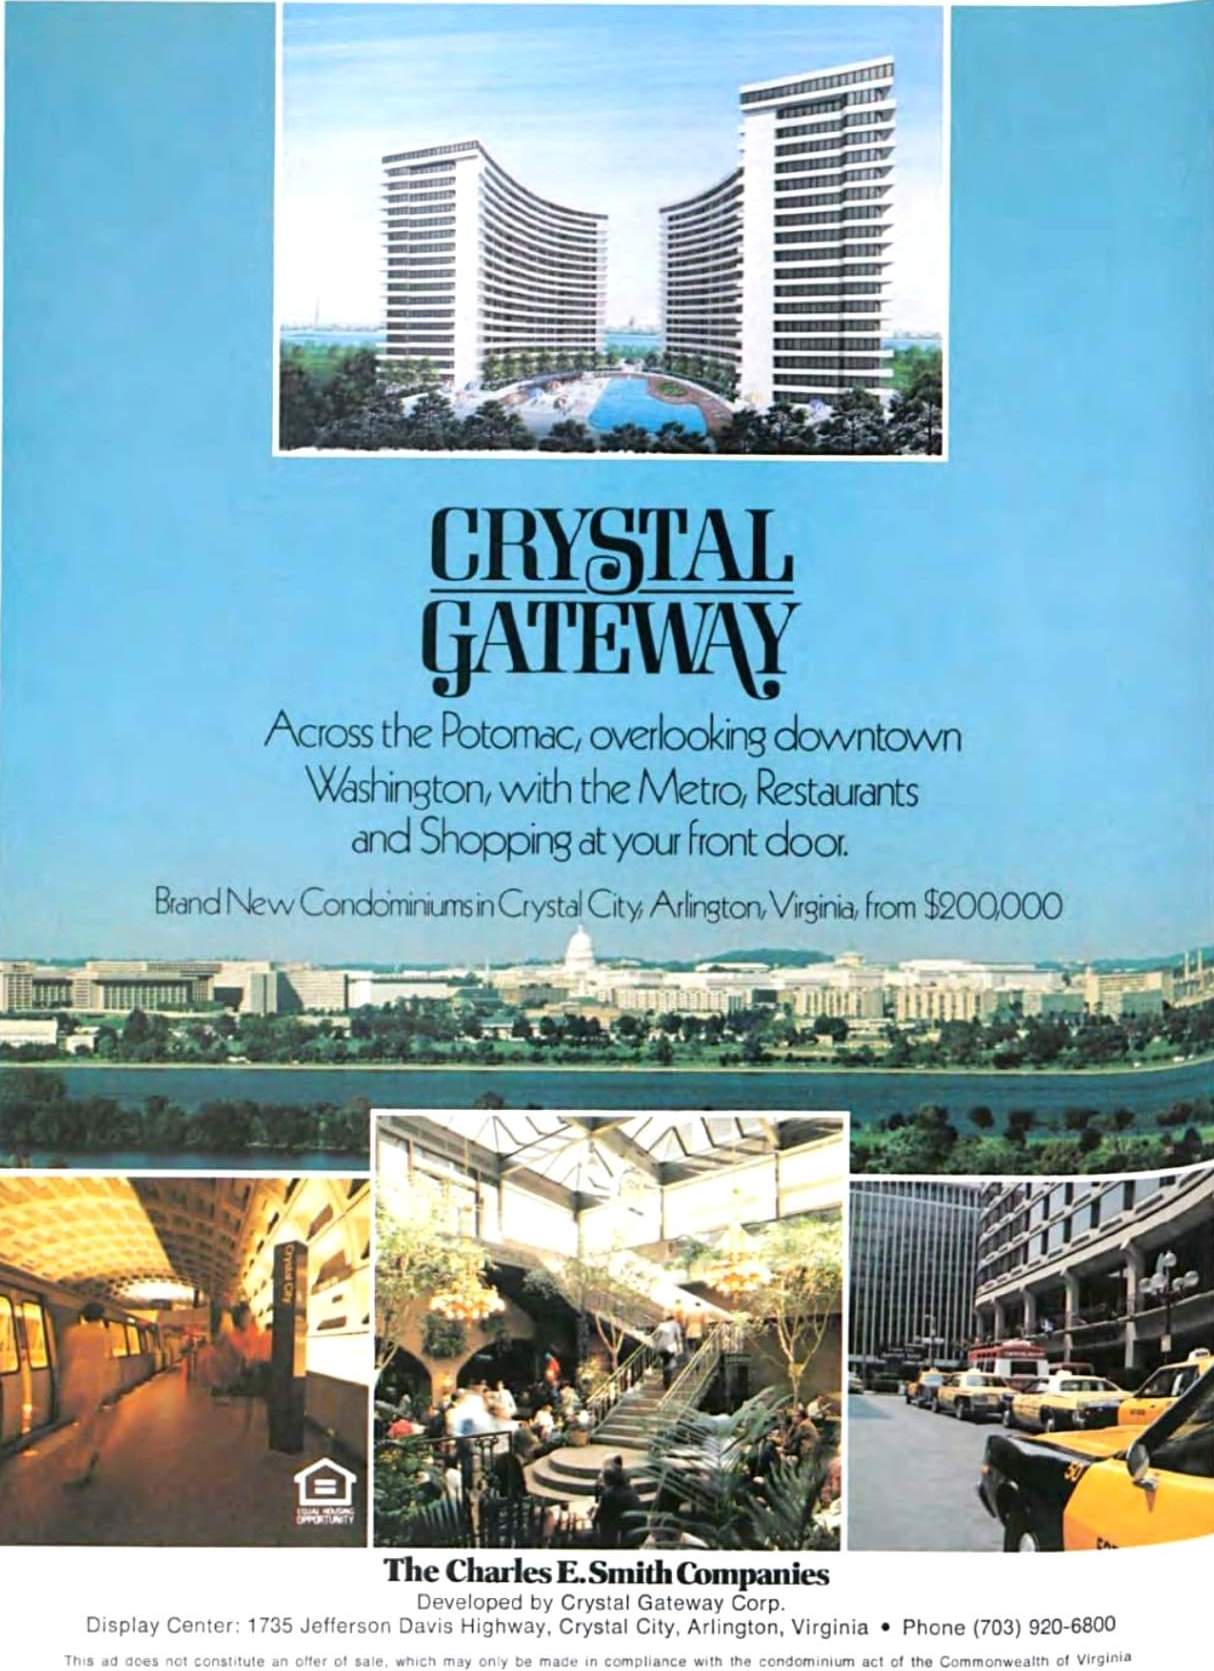 Crystal Gateway Condominium in Arlington, Virginia